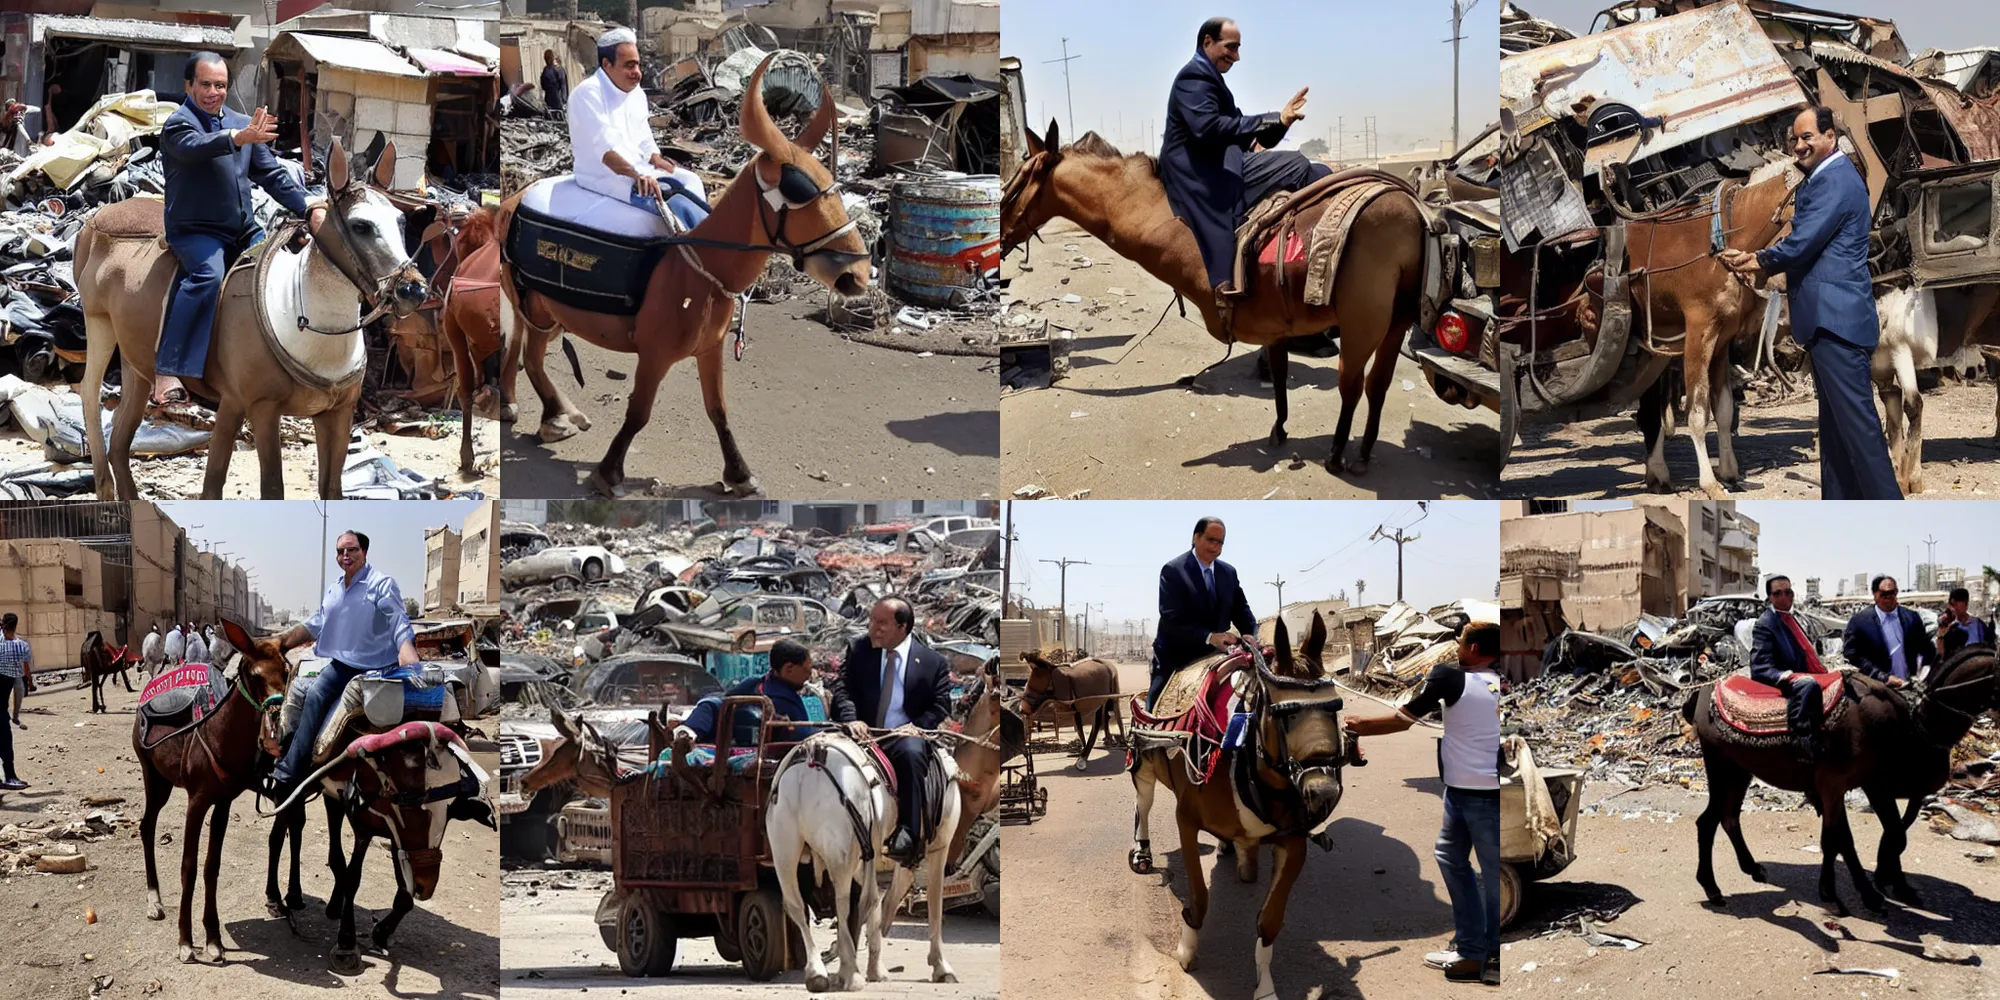 Prompt: president Sisi of egypt riding a mule through a junkyard